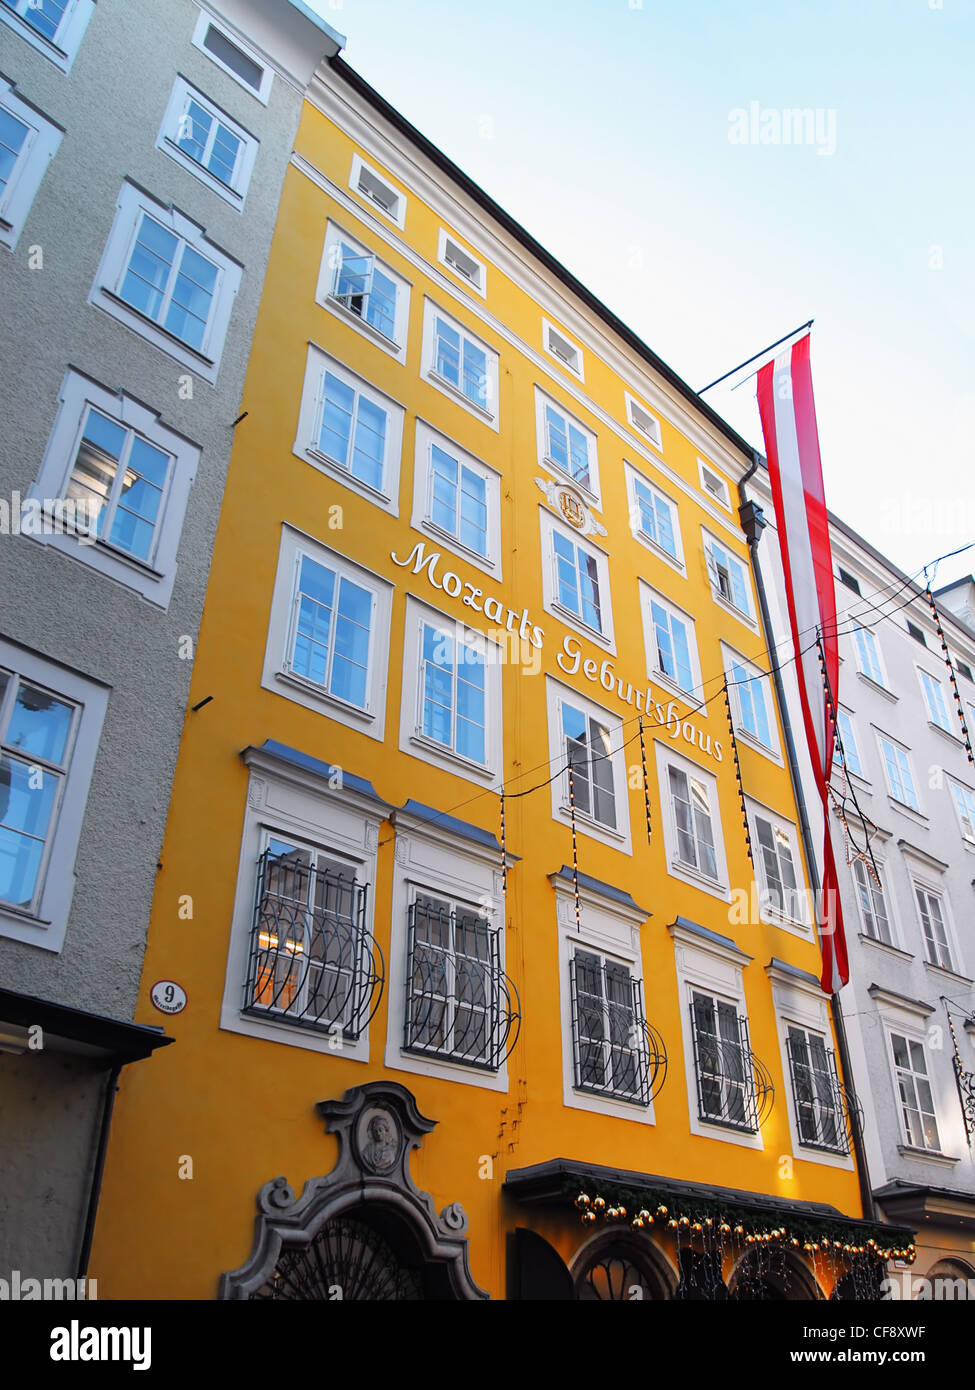 Birthplace of Wolfgang Mozart Amadeus in Salzburg, Austria Stock Photo